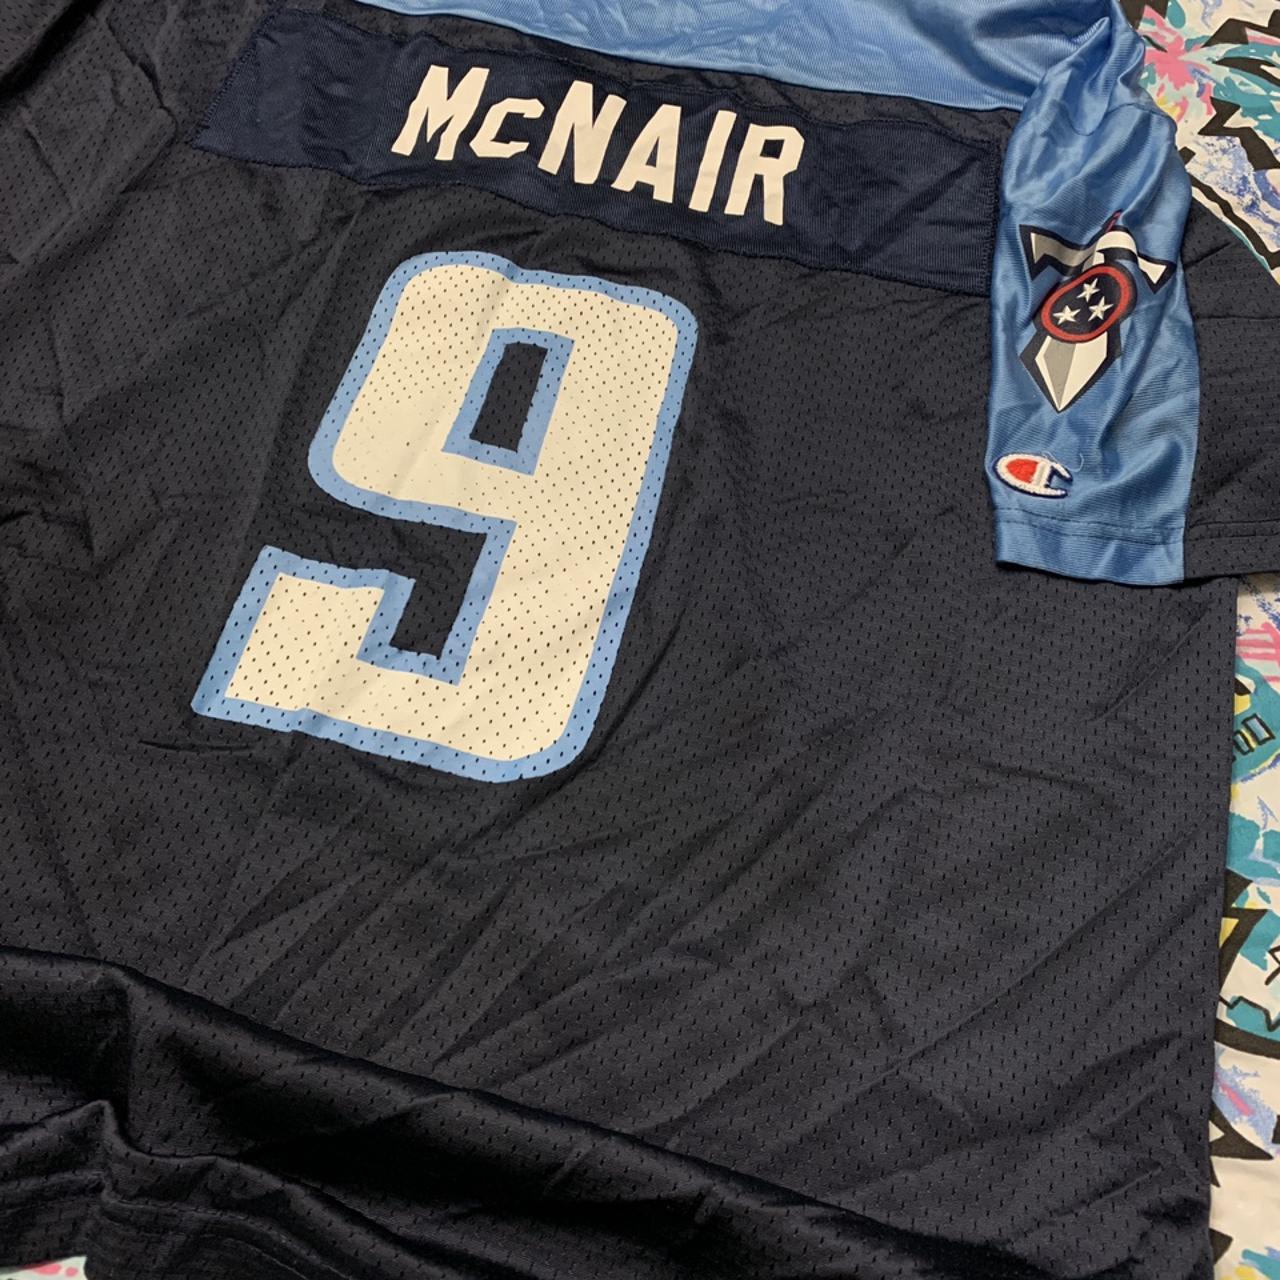 Champion Steve McNair NFL Jerseys for sale